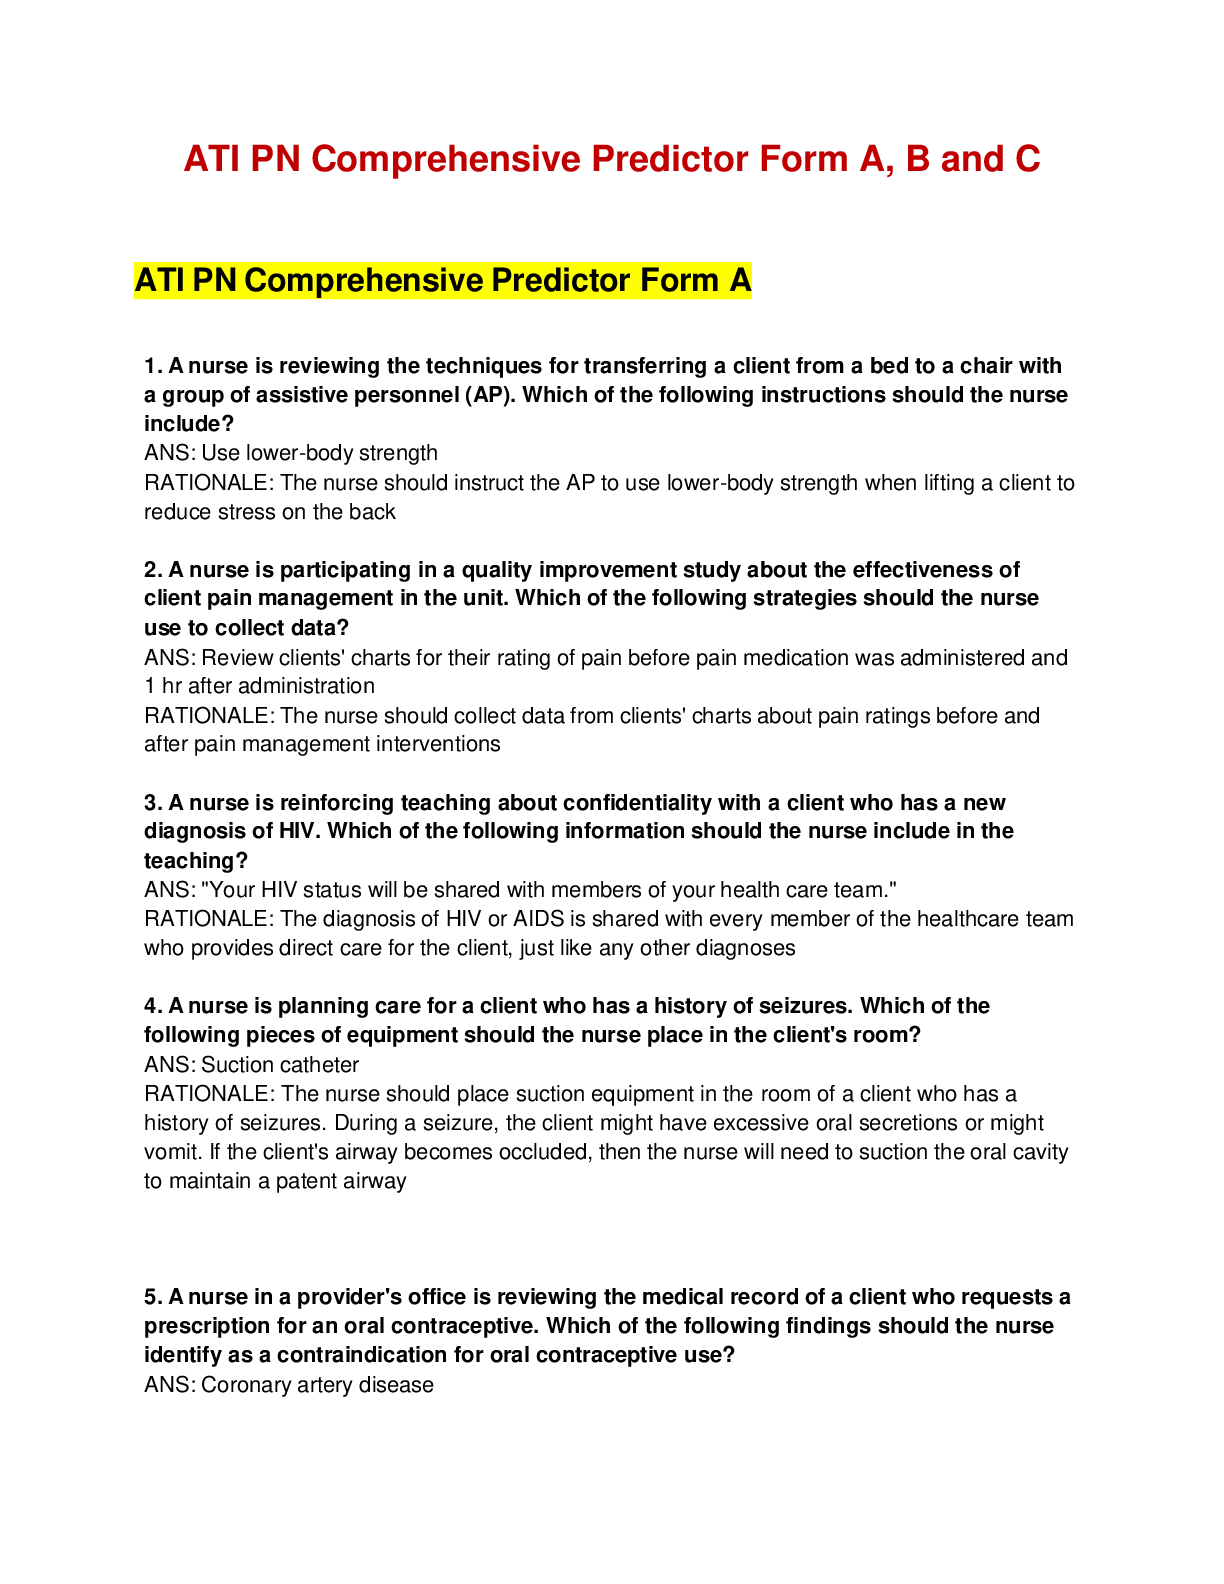 20222023 ATI PN COMPREHENSIVE PREDICTOR TEST BANK (FORM A, B, & C